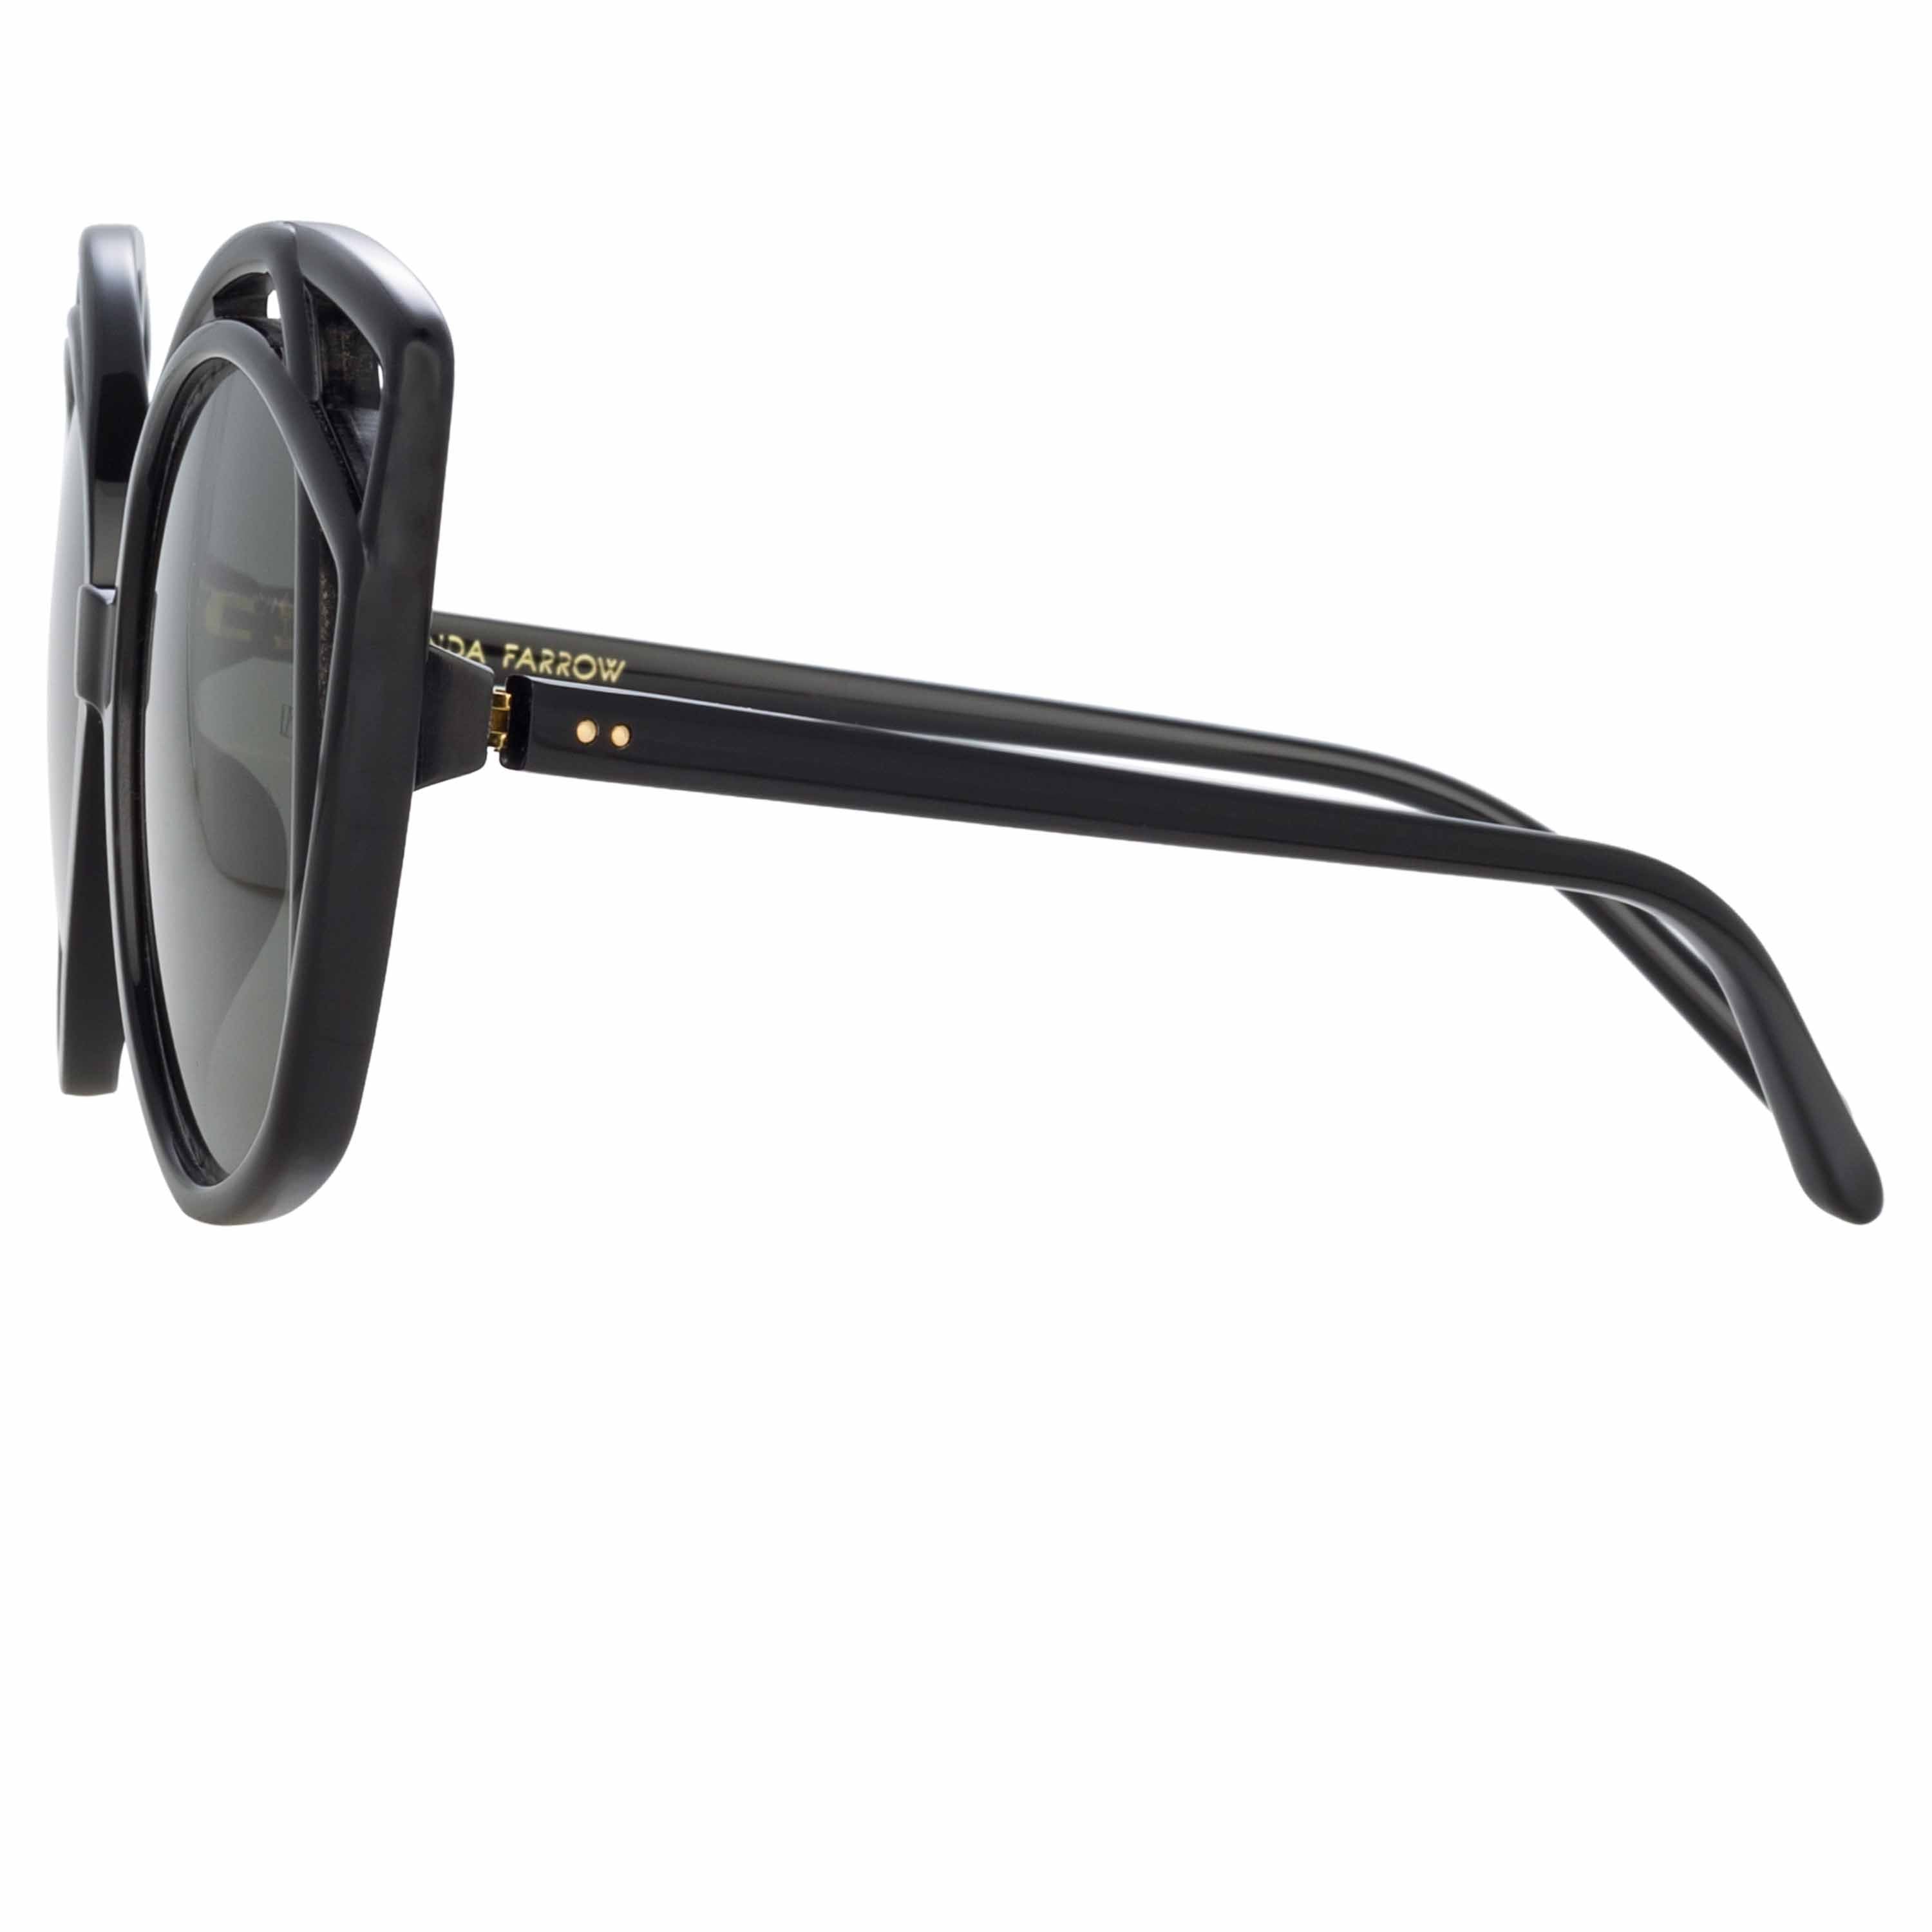 Color_LFL1174C1SUN - Isler Cat Eye sunglasses in Black